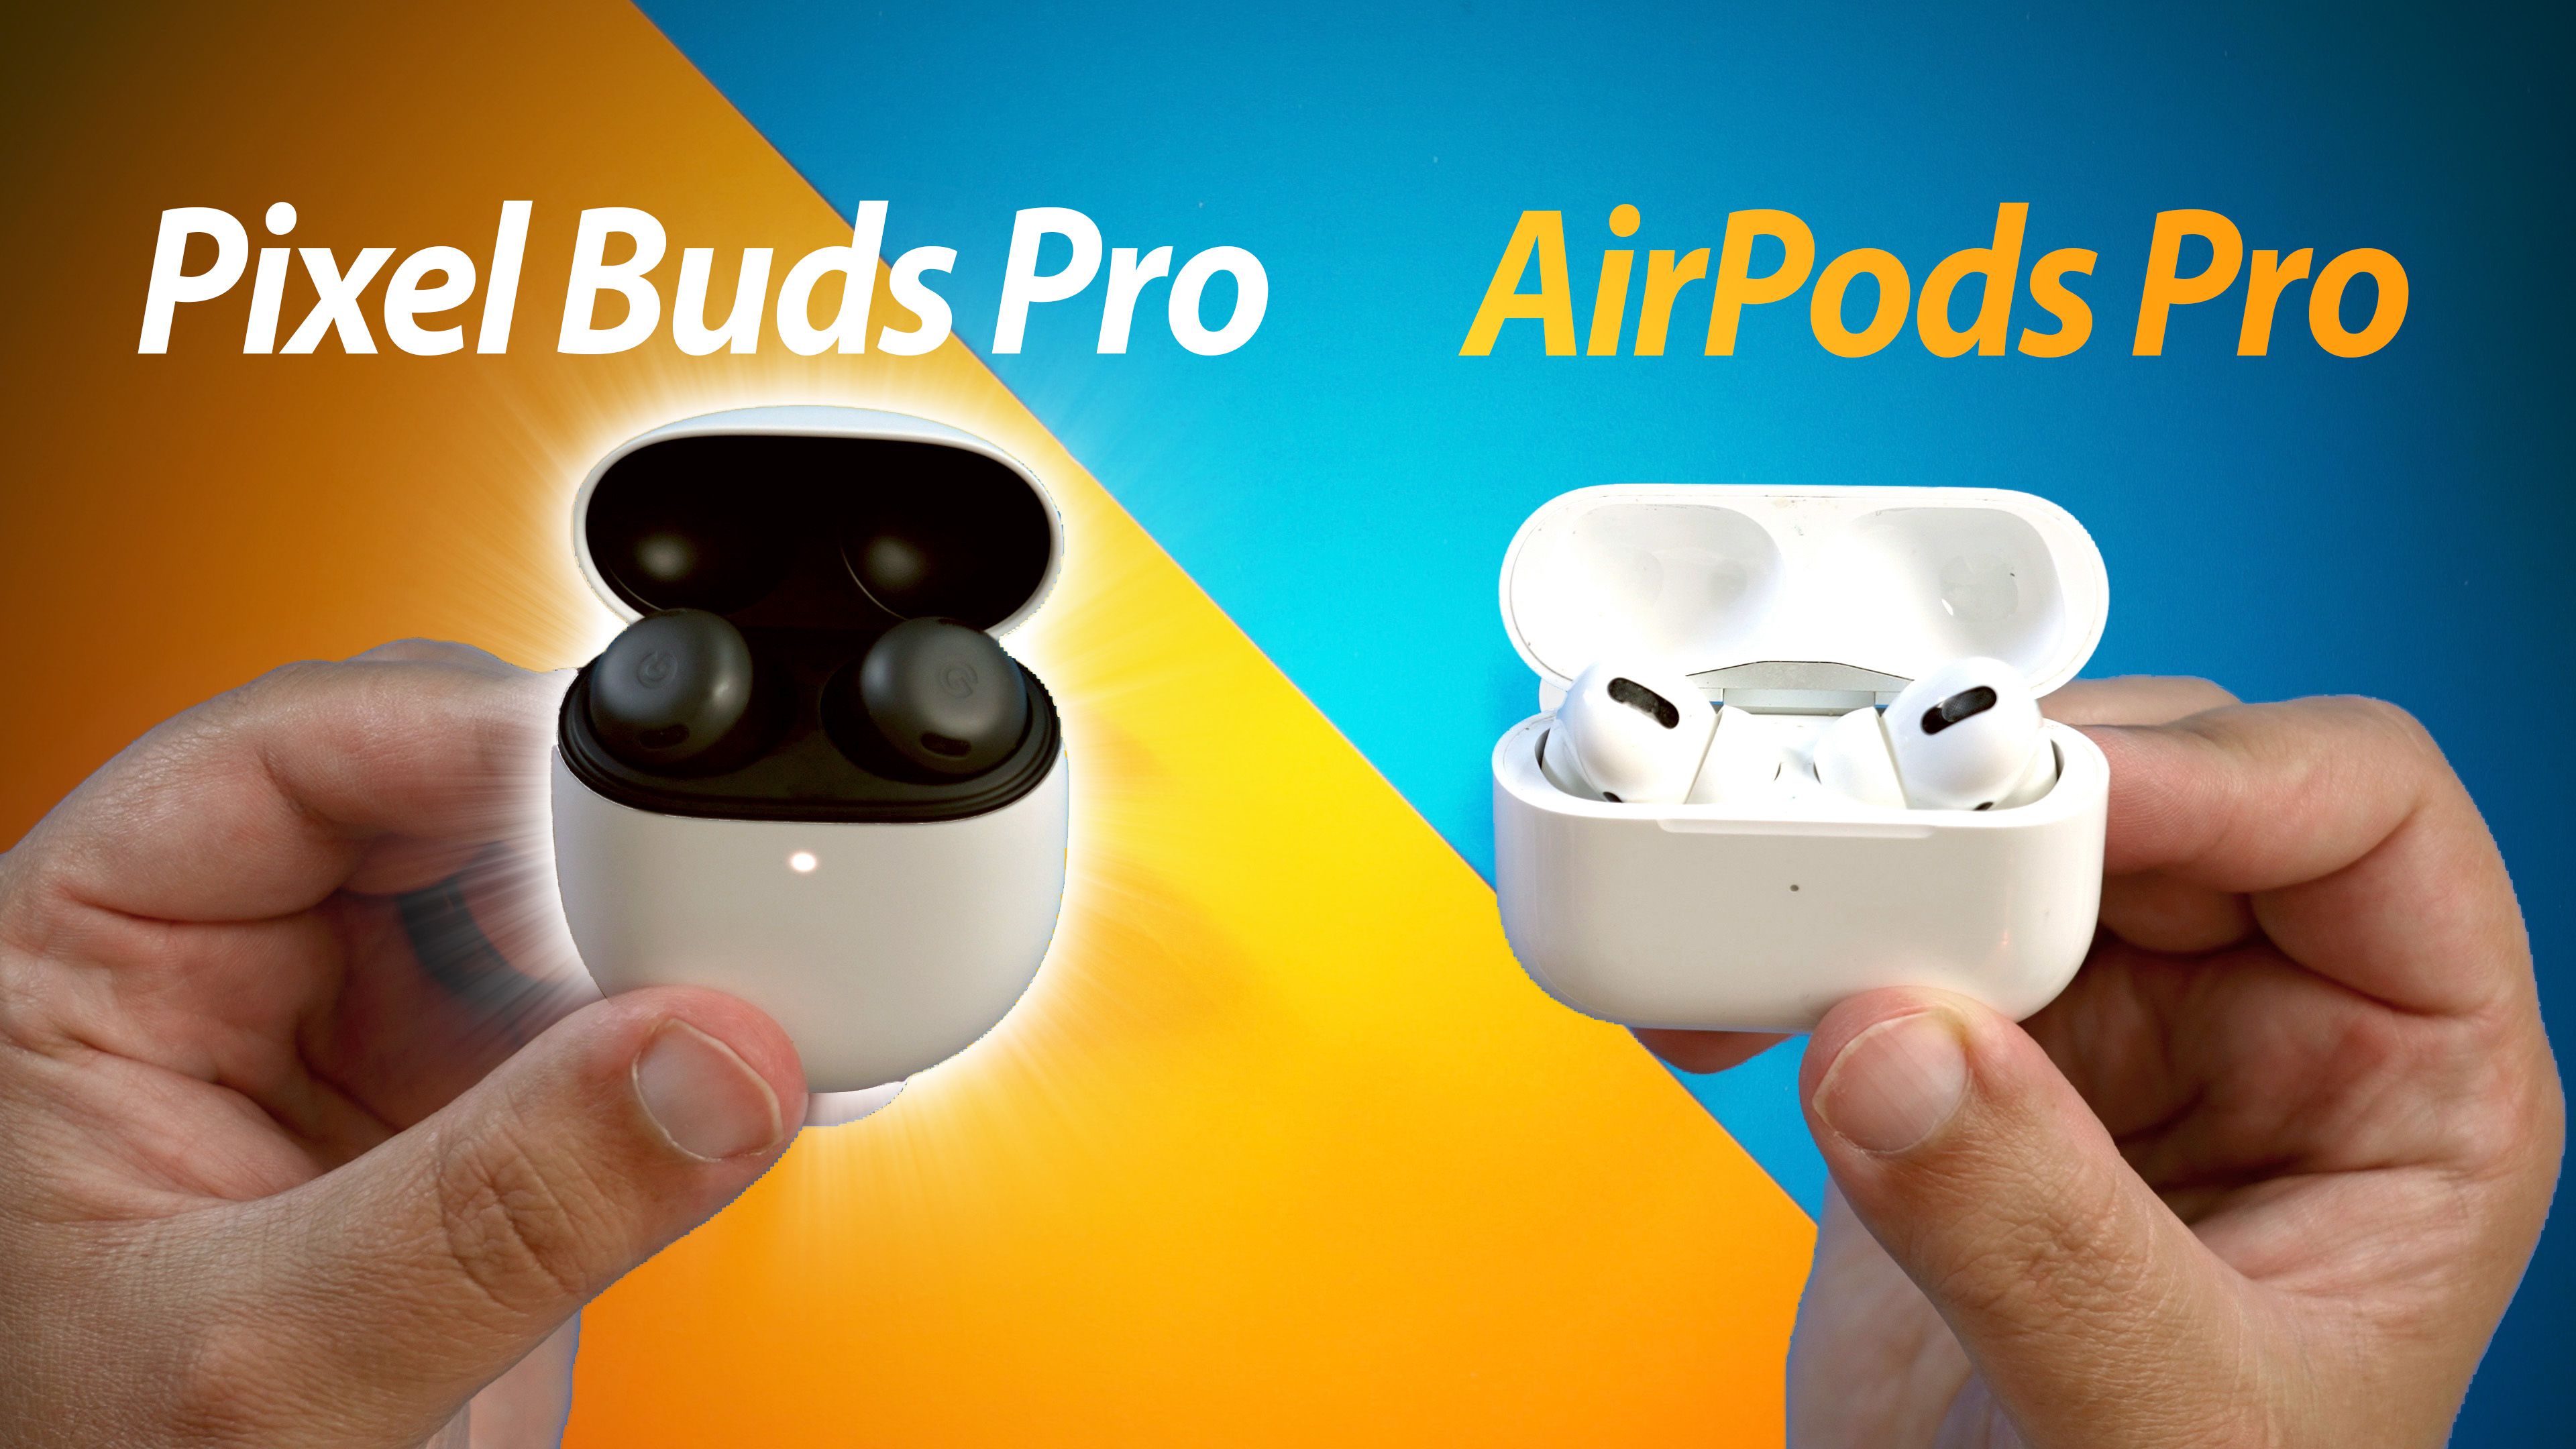 Google's $200 Pixel Buds Pro vs. Apple's $249 AirPods Pro